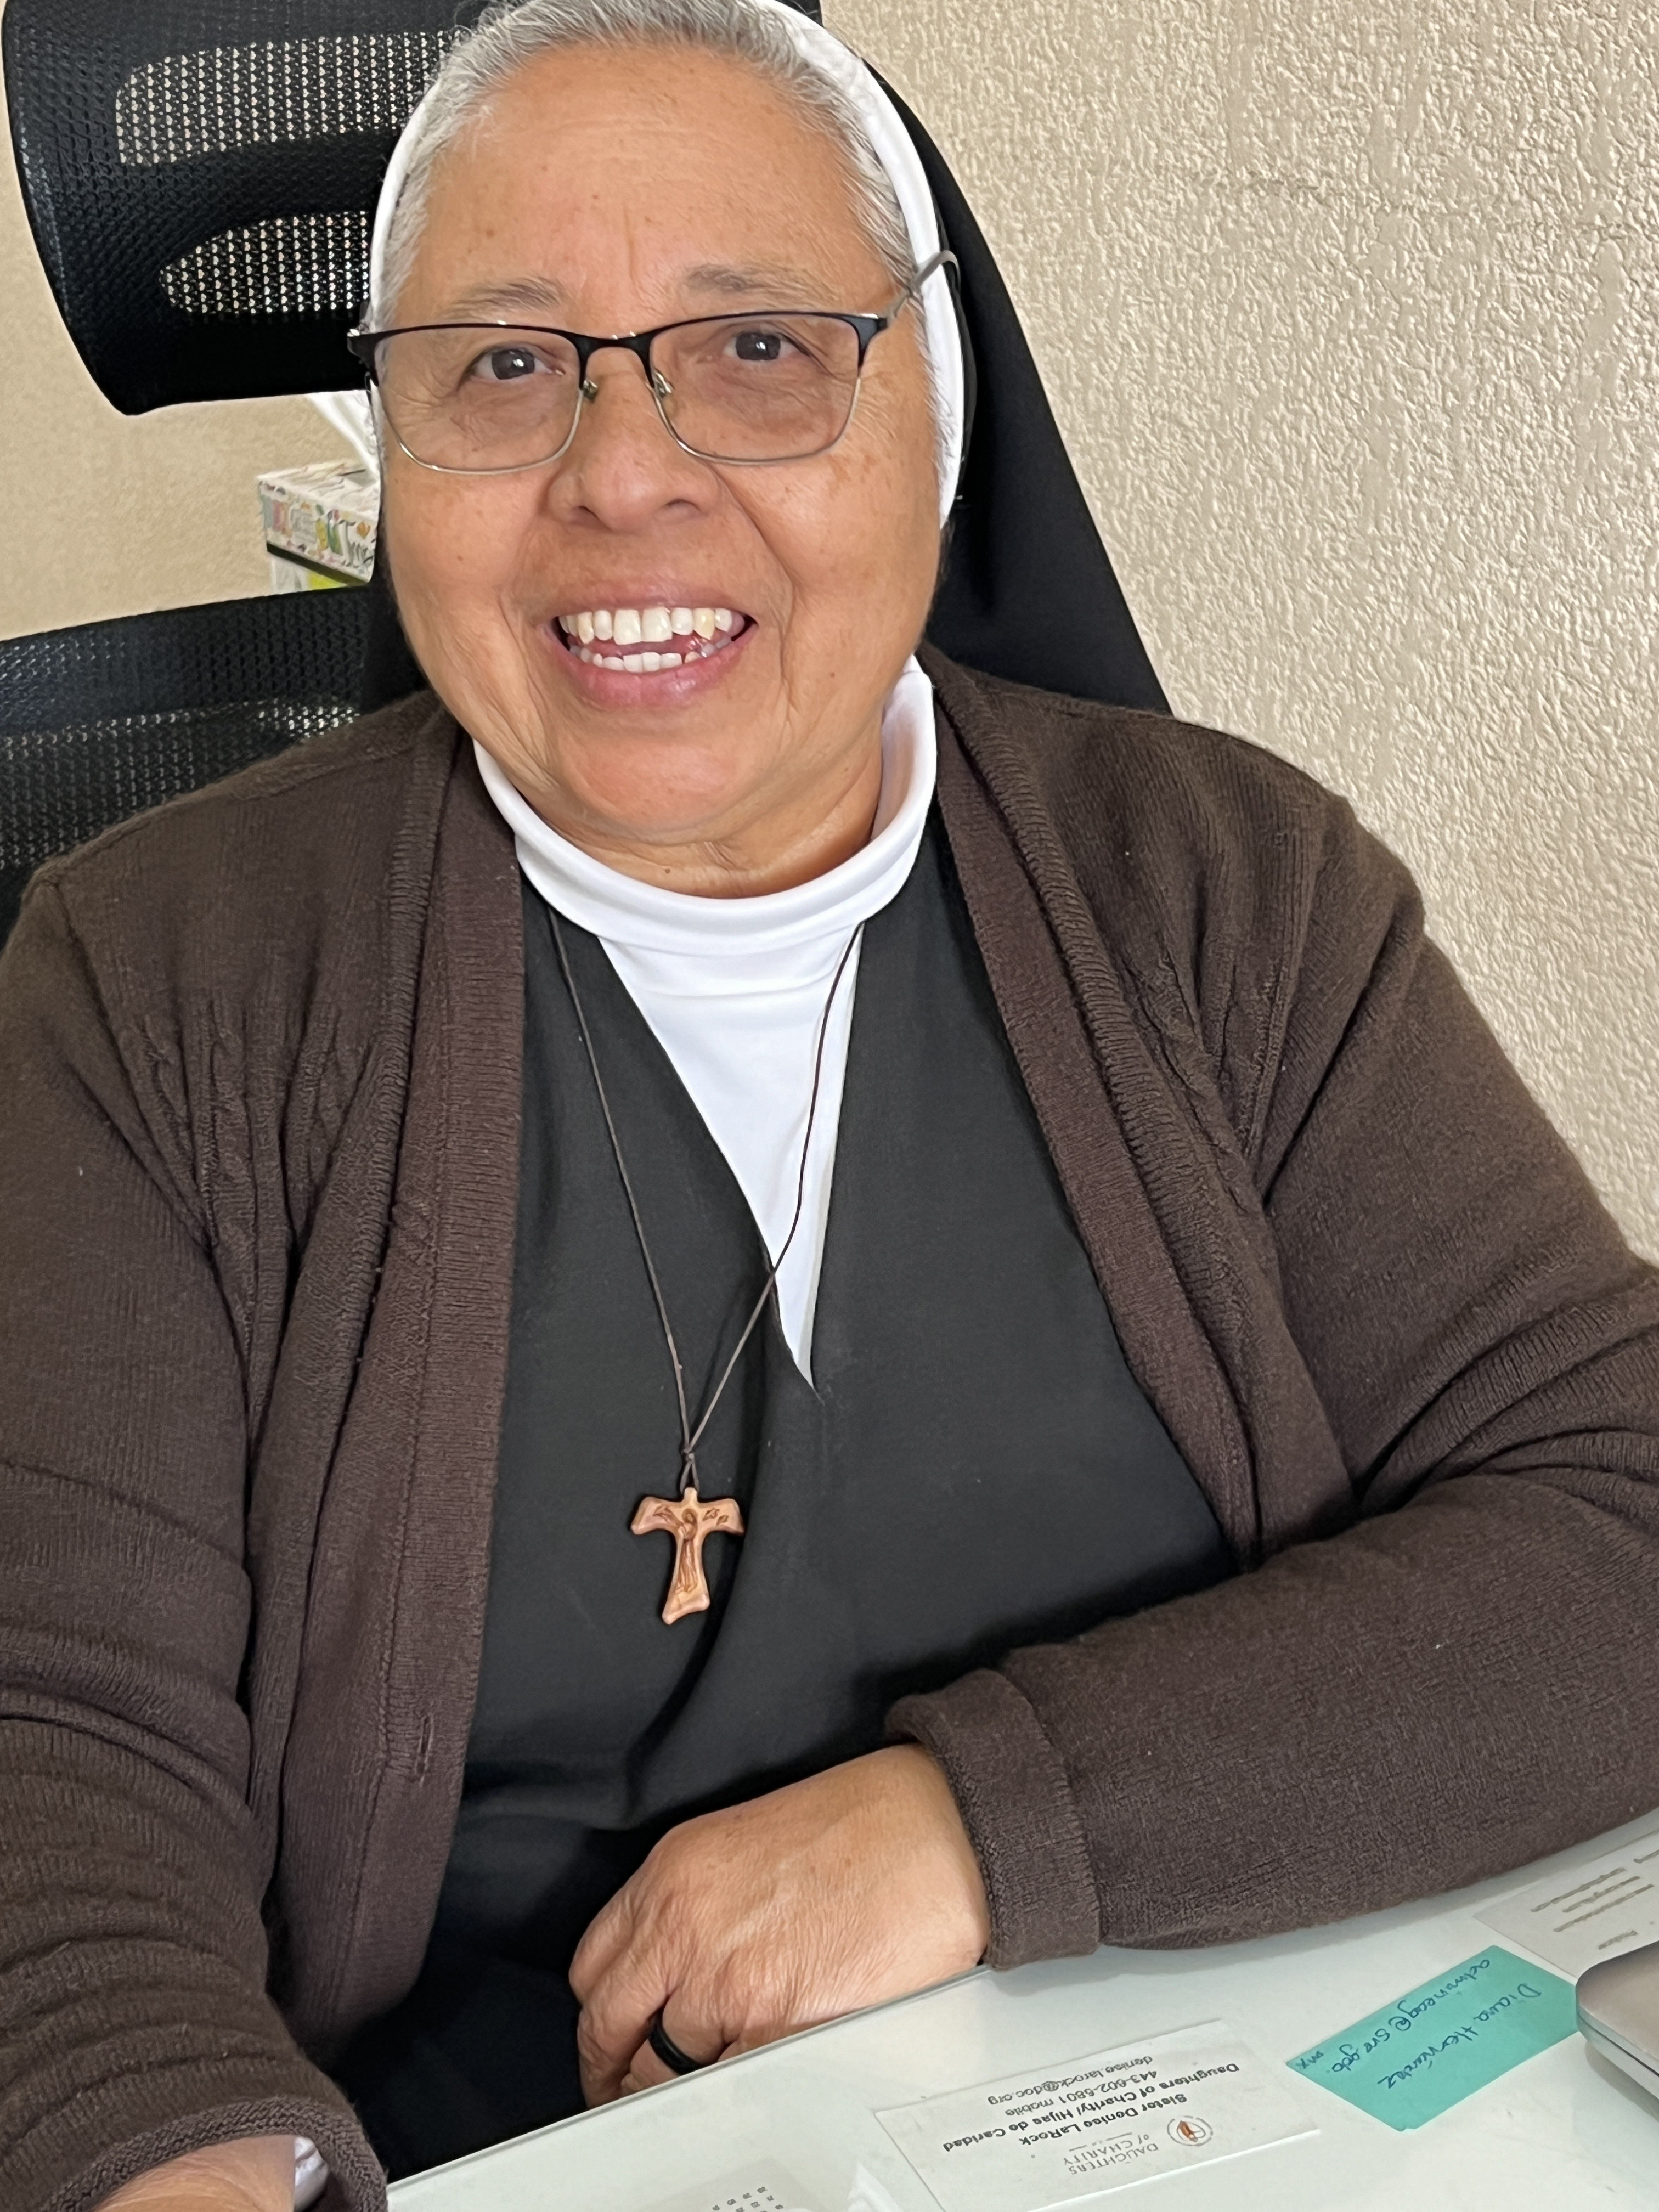  Sister Isabel Turcios